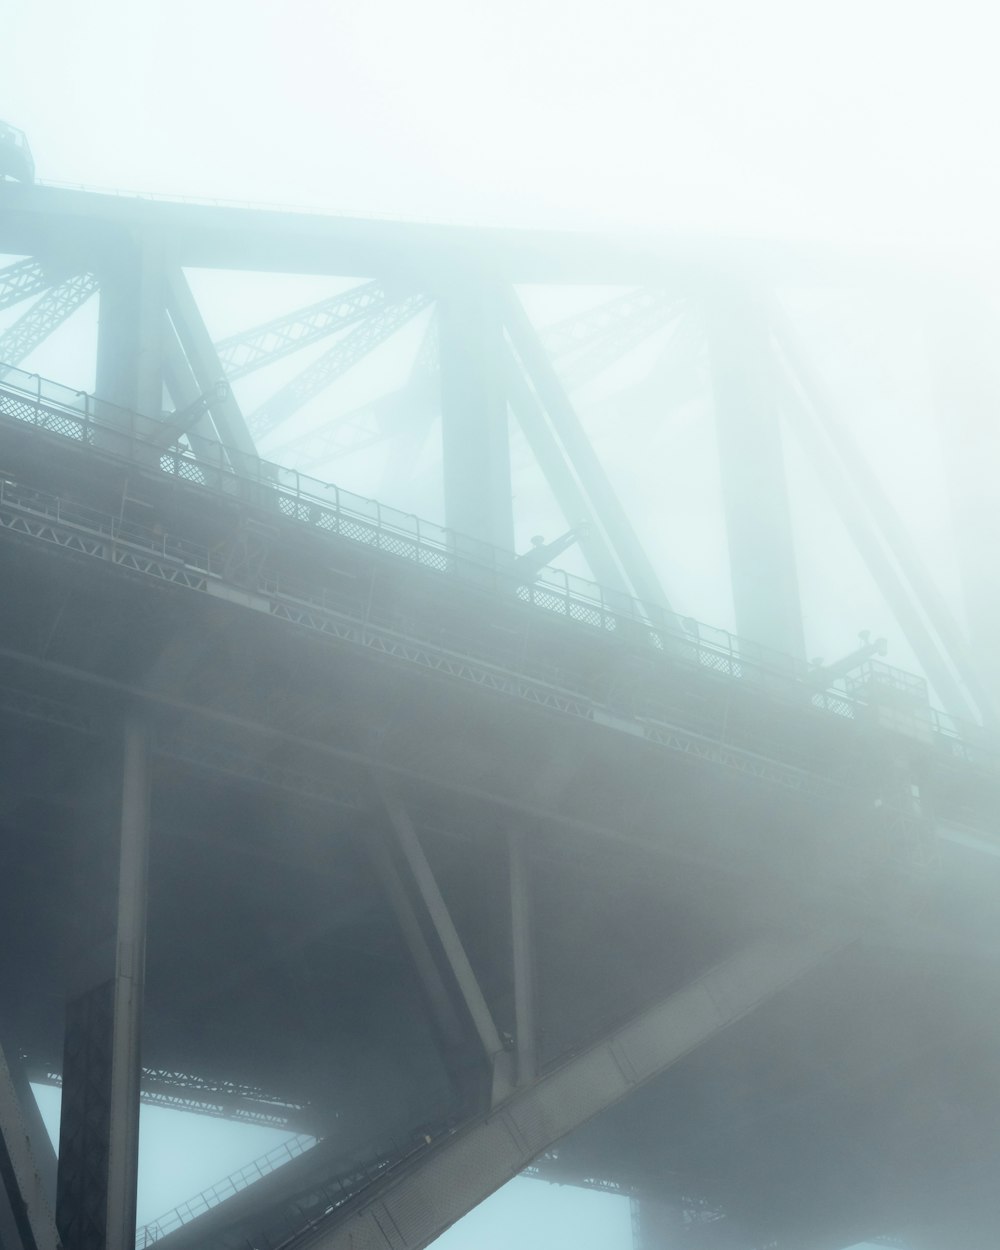 foto in scala di grigi di un ponte